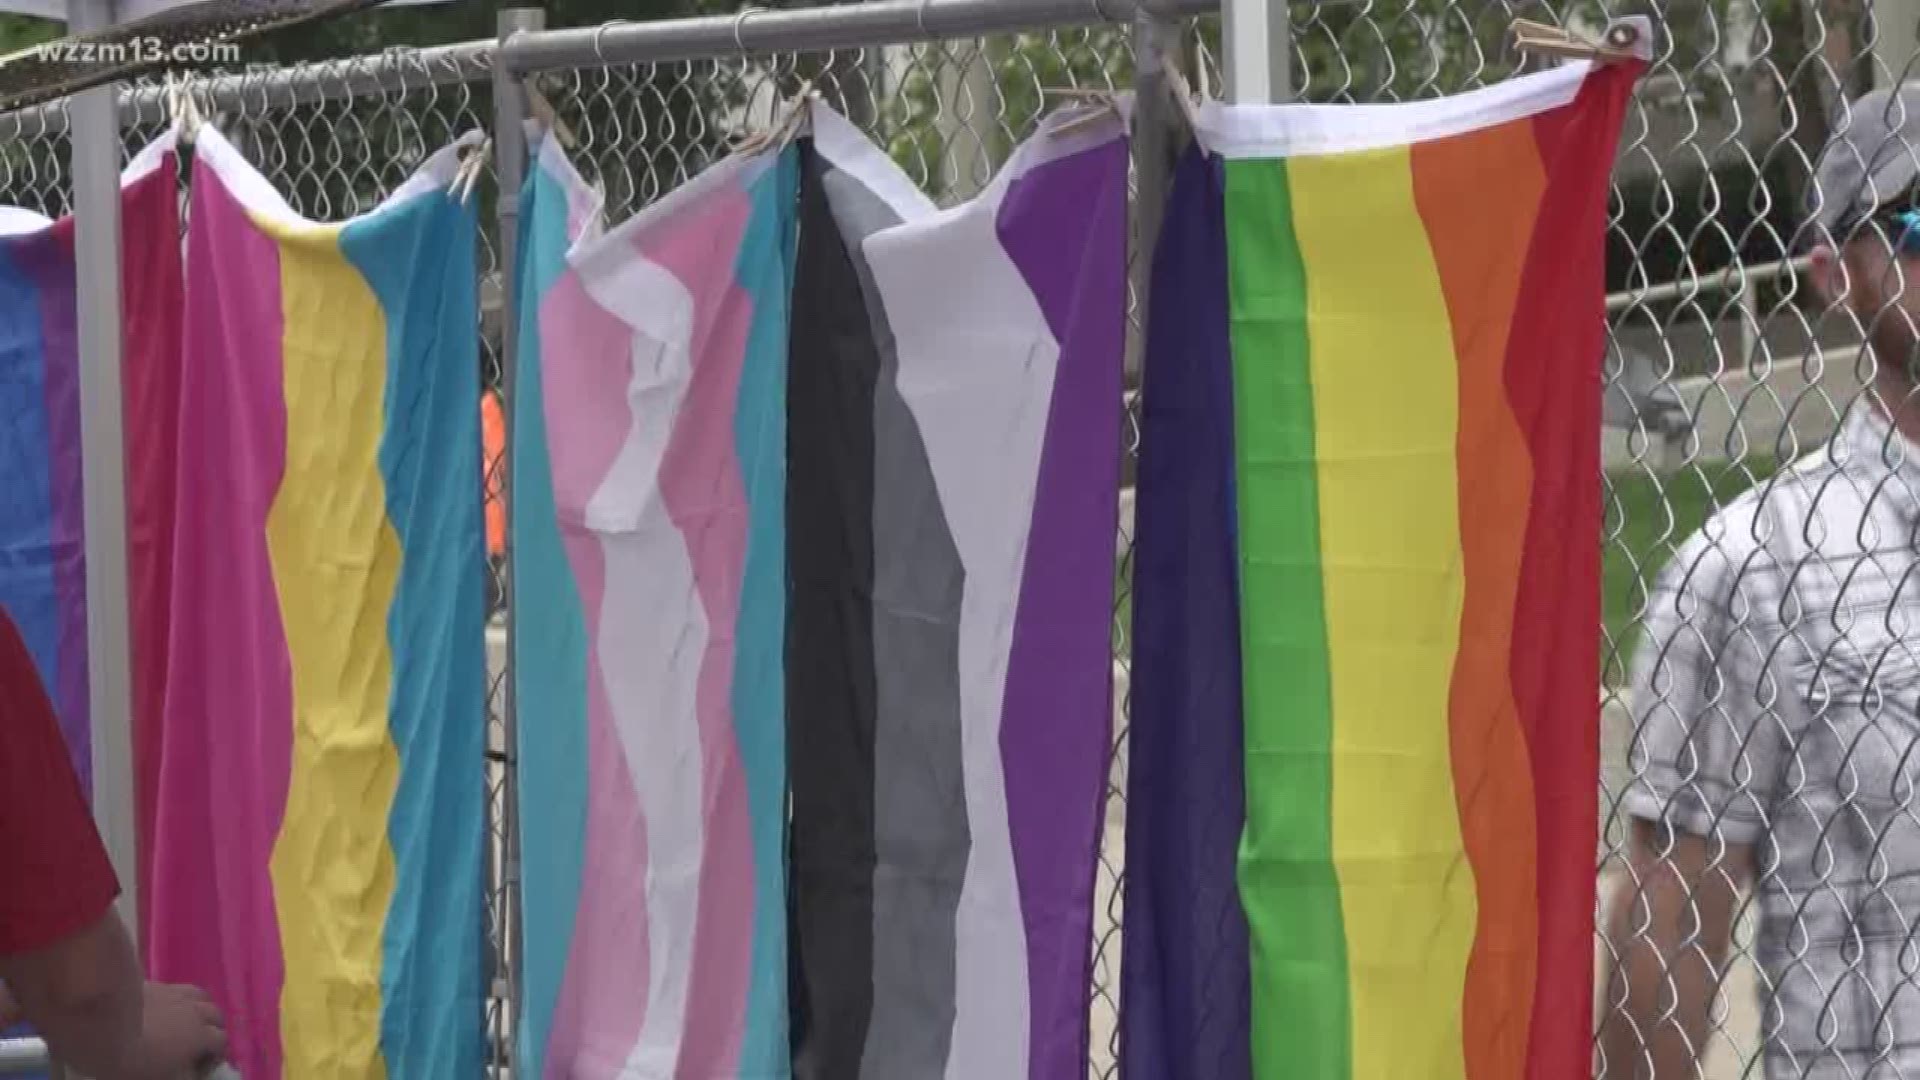 Grand Rapids celebrates Pride Month